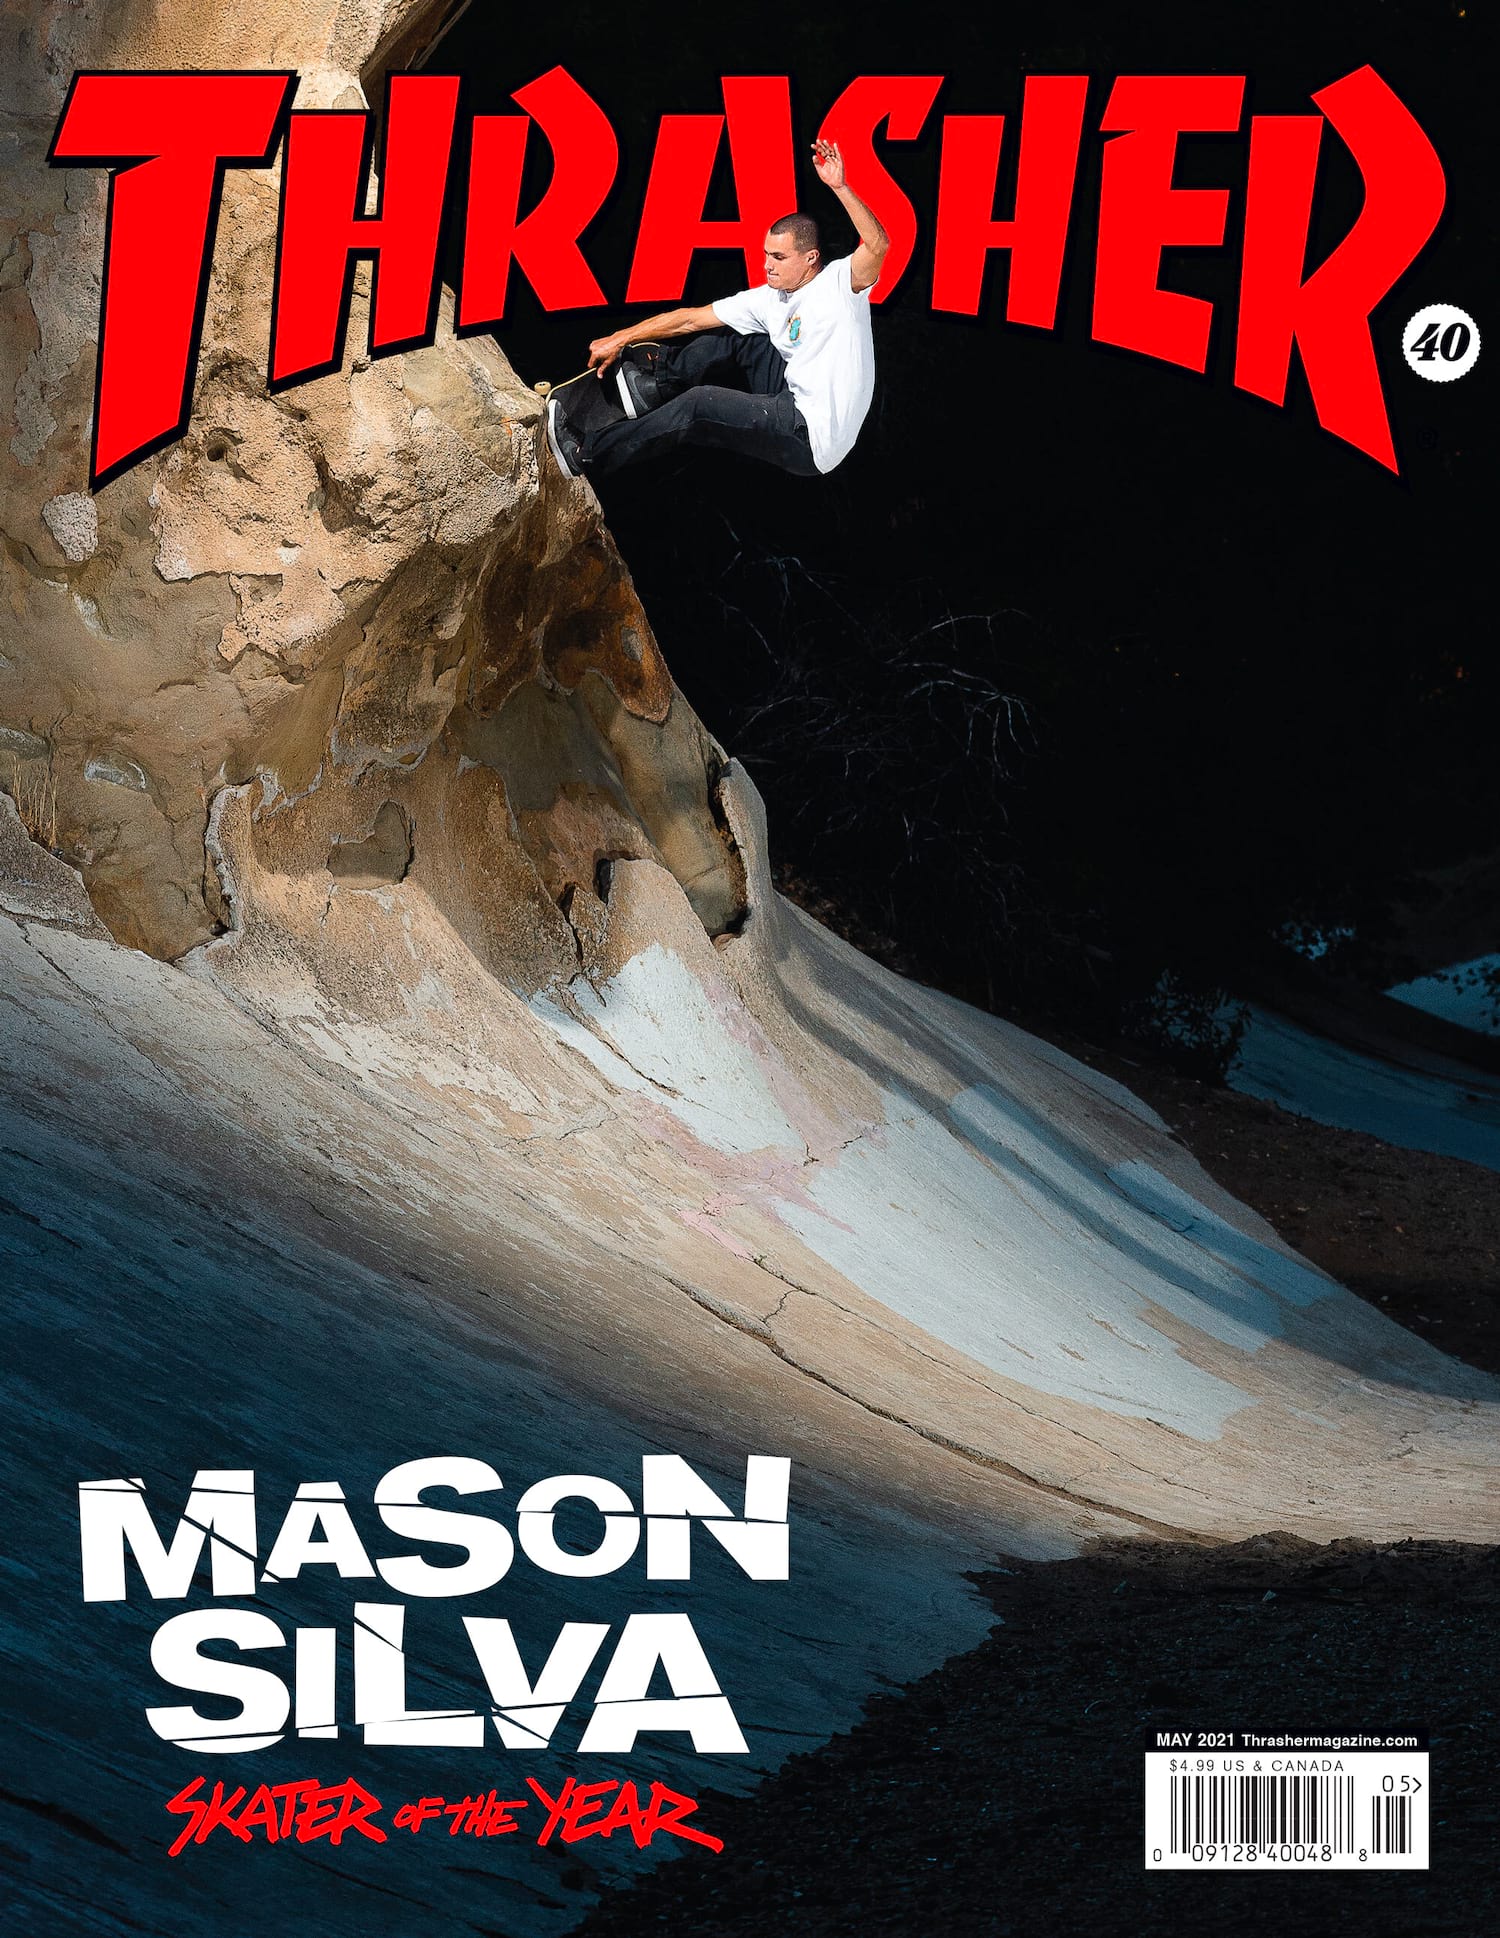 Thrasher Magazine - Mason Silva SOTY Trip: "Spritz and Destroy" Article